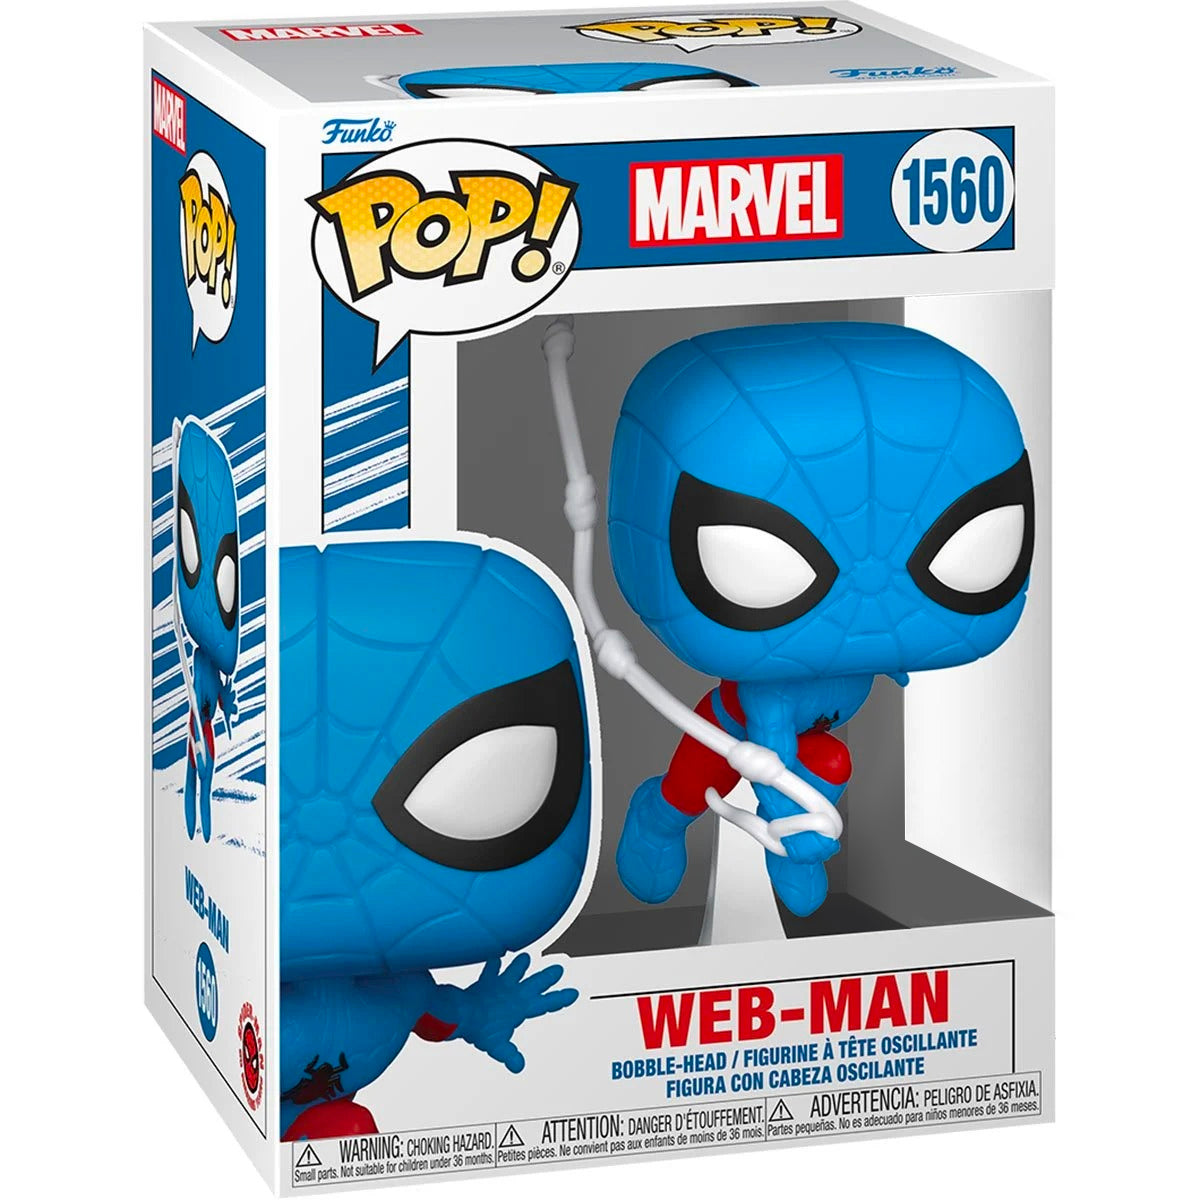 Asia Mediador Ya Funko Pop Marvel: SpiderMan - Web Man Exclusivo — Distrito Max